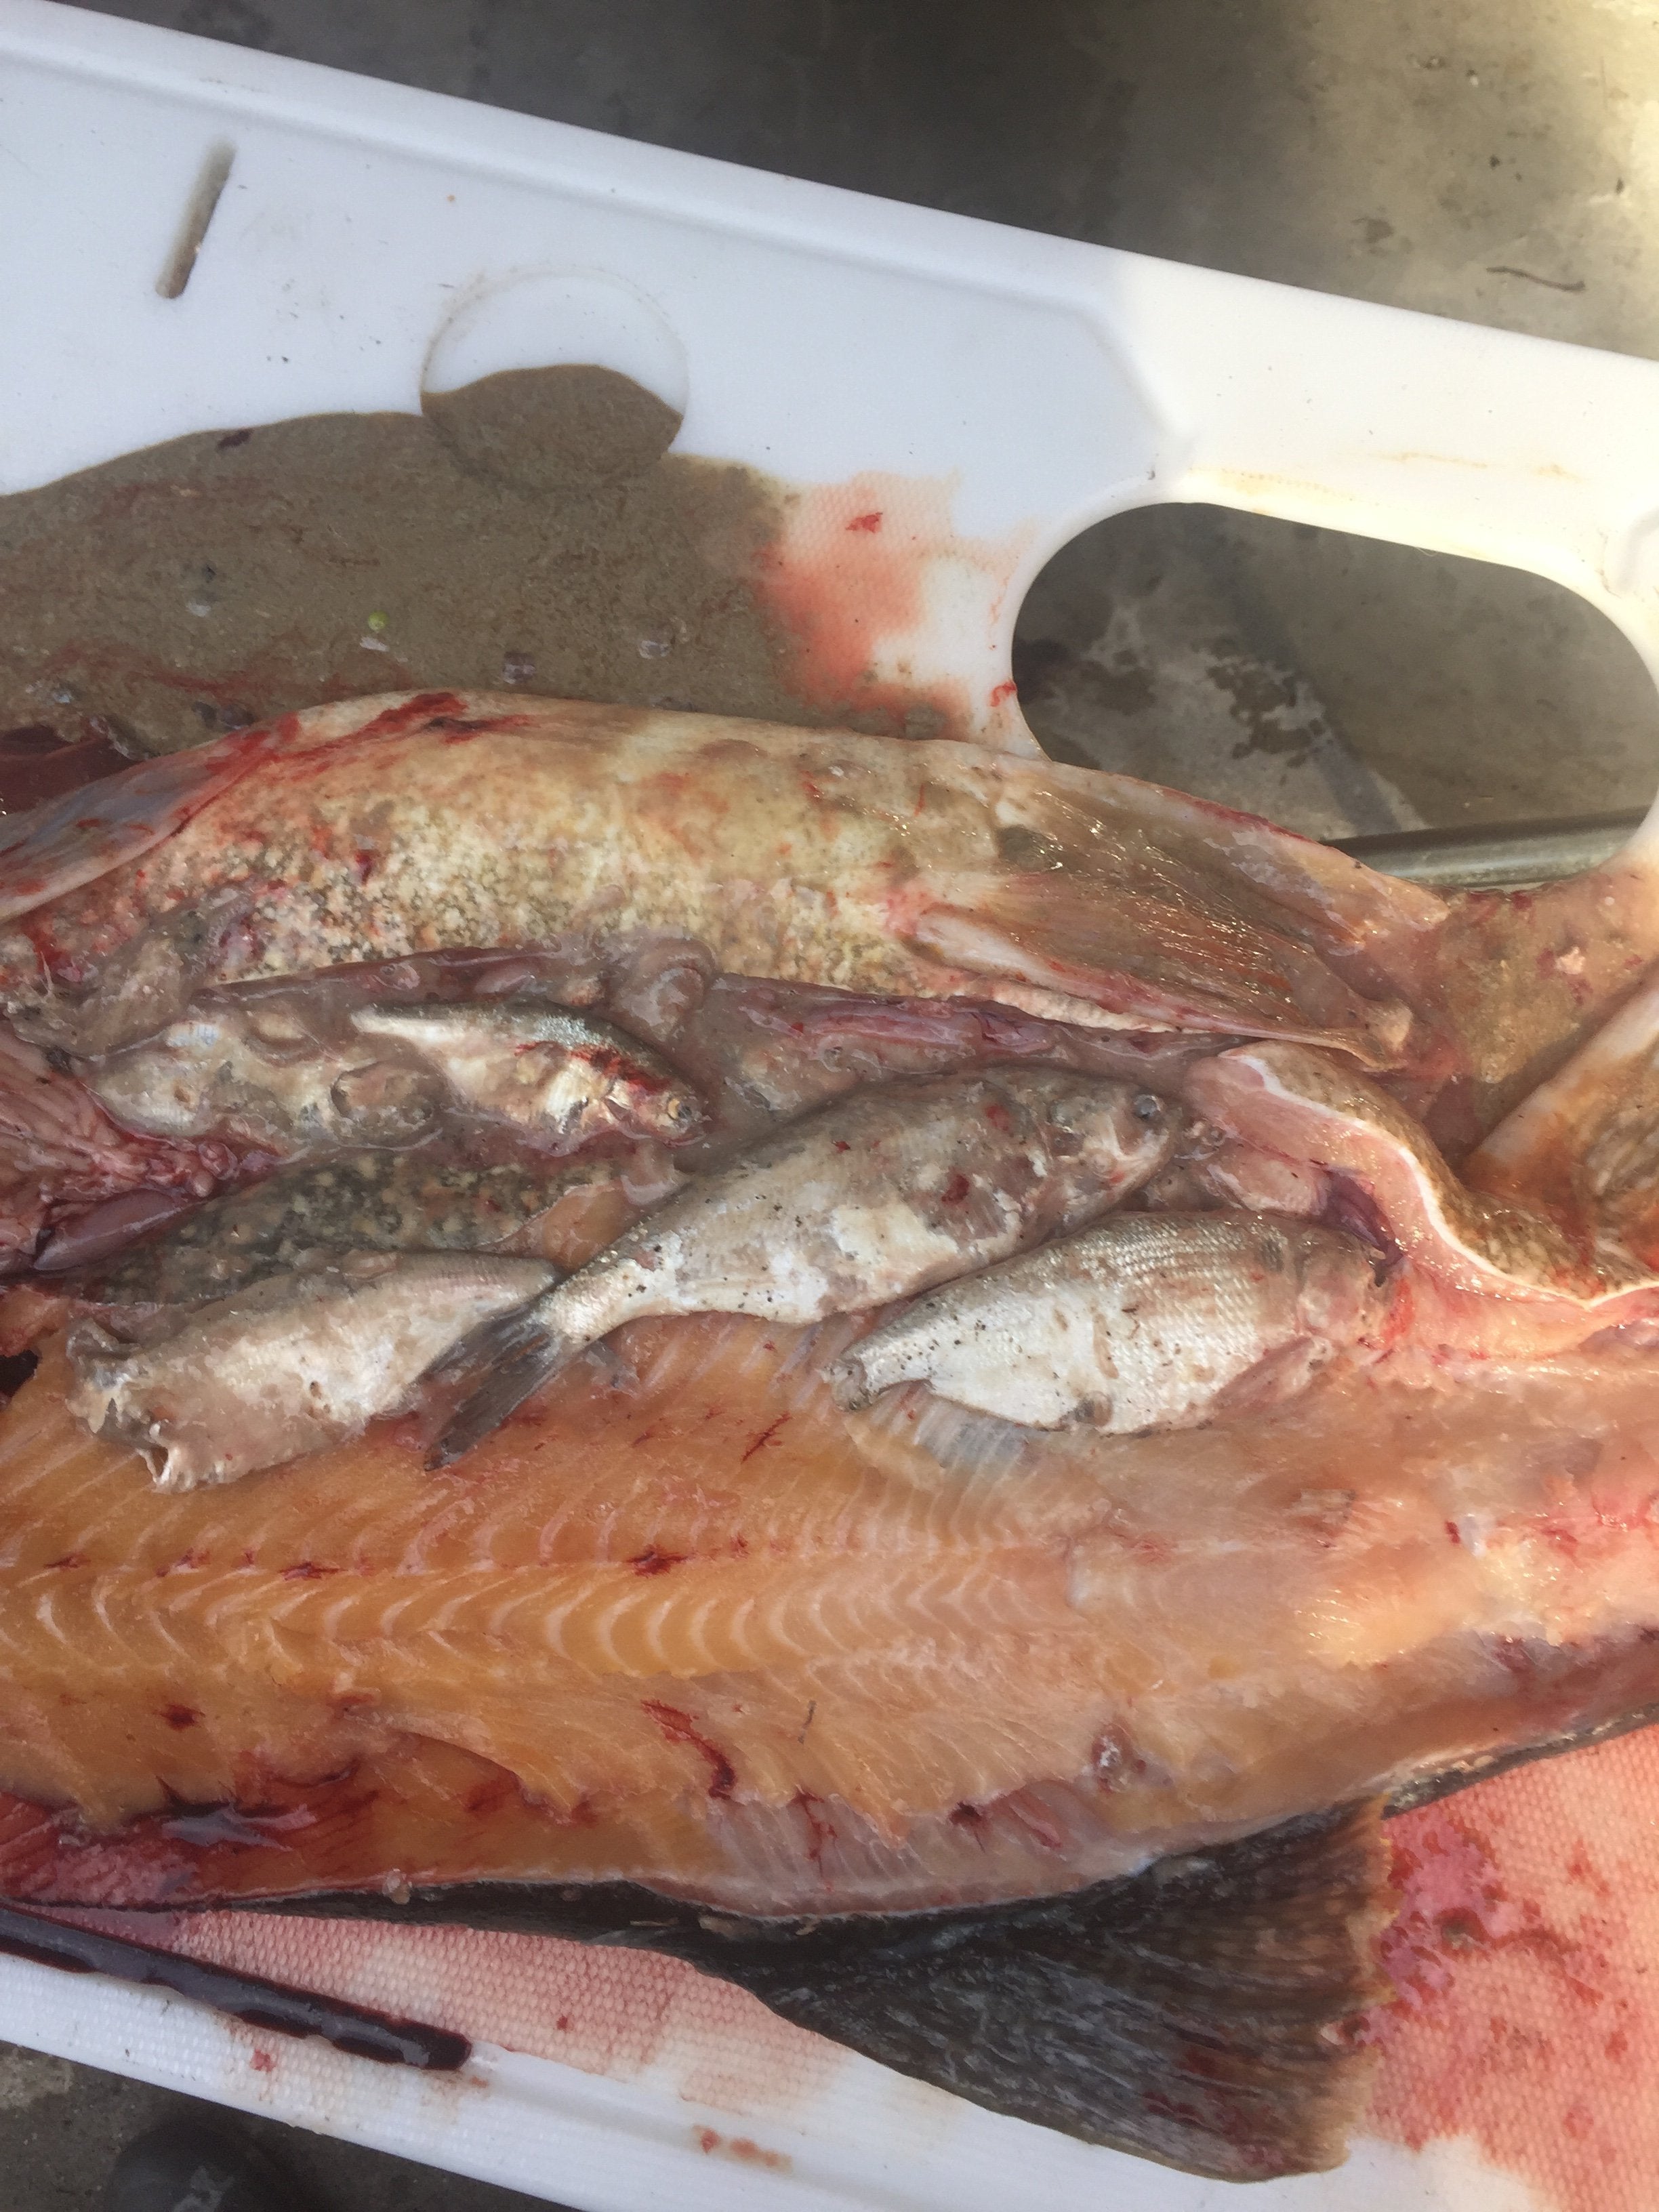 Primary baitfish of Lake Huron walleye/smallmouth?